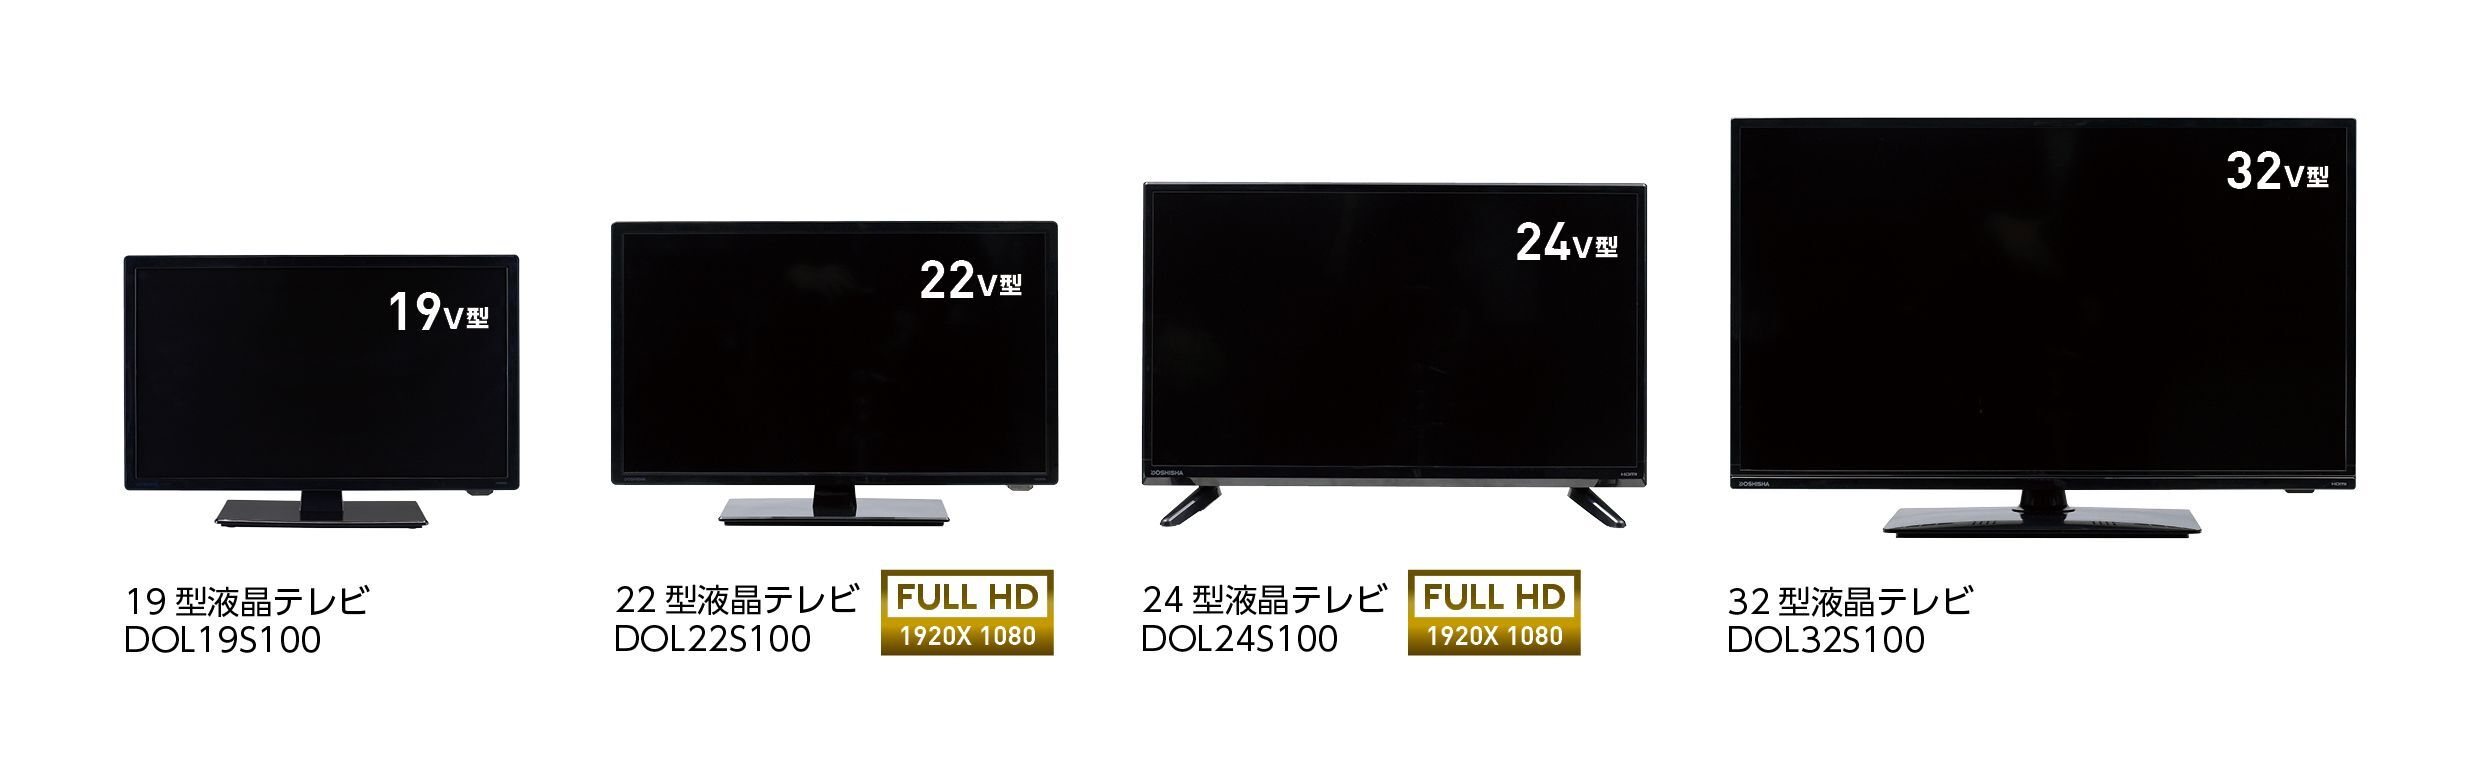 ⭐️ブルーライトガード⭐️DOSHISYA 32型液晶テレビ DOL32H100 ドウシシャ 2019年式 0803-05